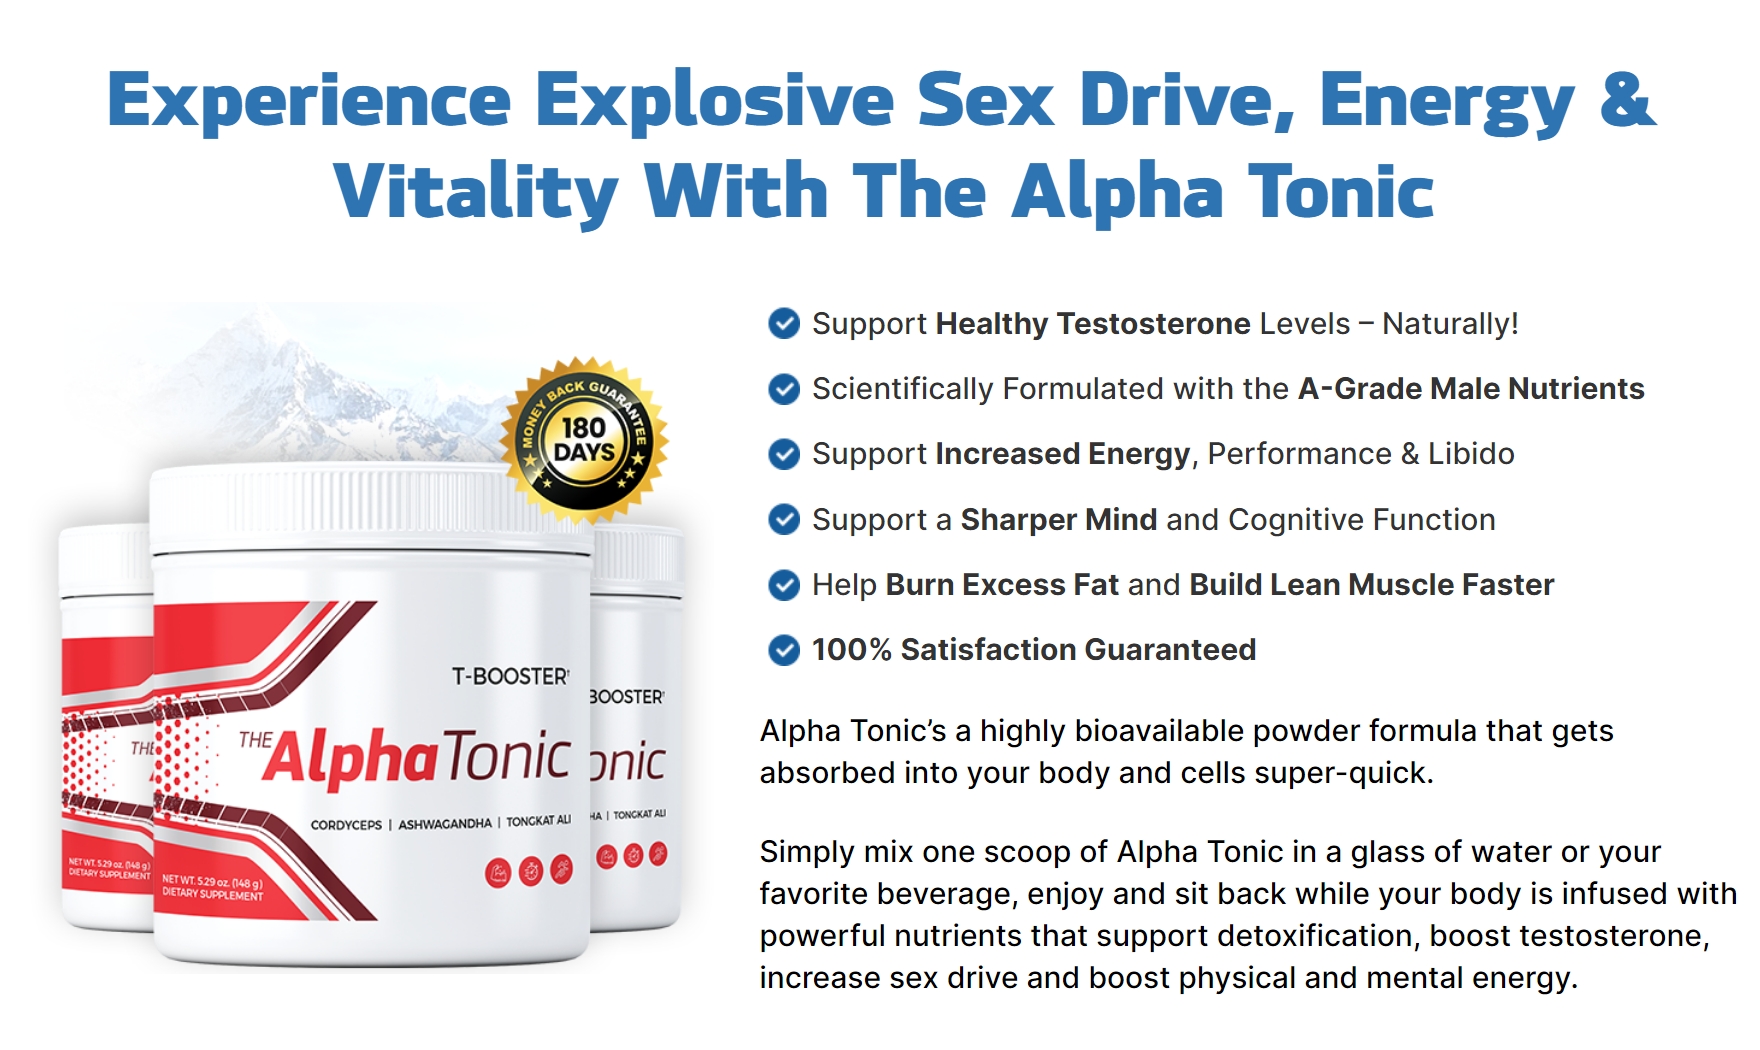 Alpha Tonic benefits